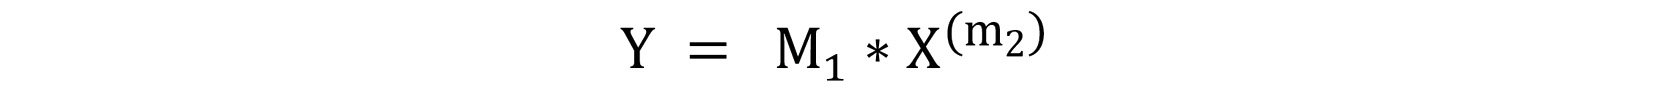 Figure 5.42: Power trend line formula
